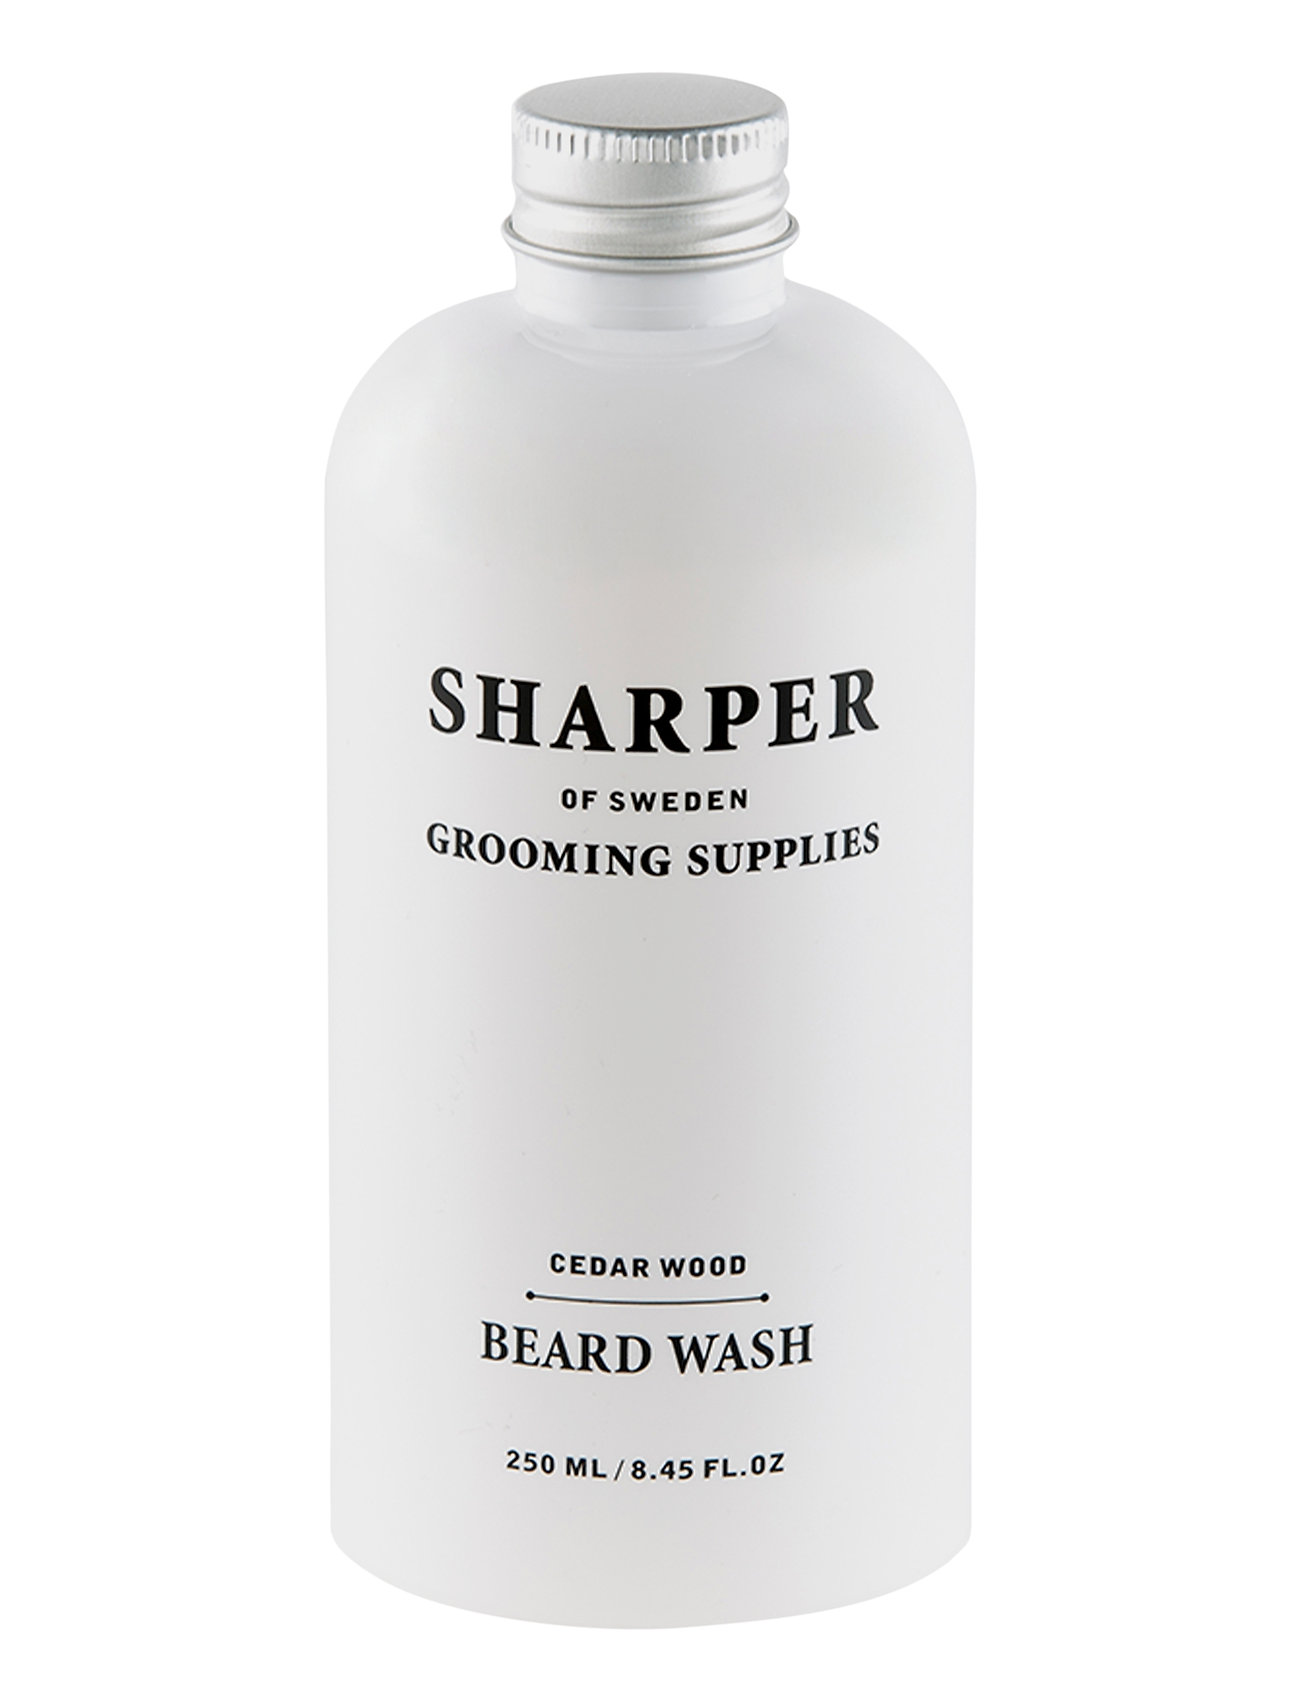 Sharper Beard Wash Cedar Wood Beauty Men Beard & Mustache Beard Shampoo Nude Sharper Grooming